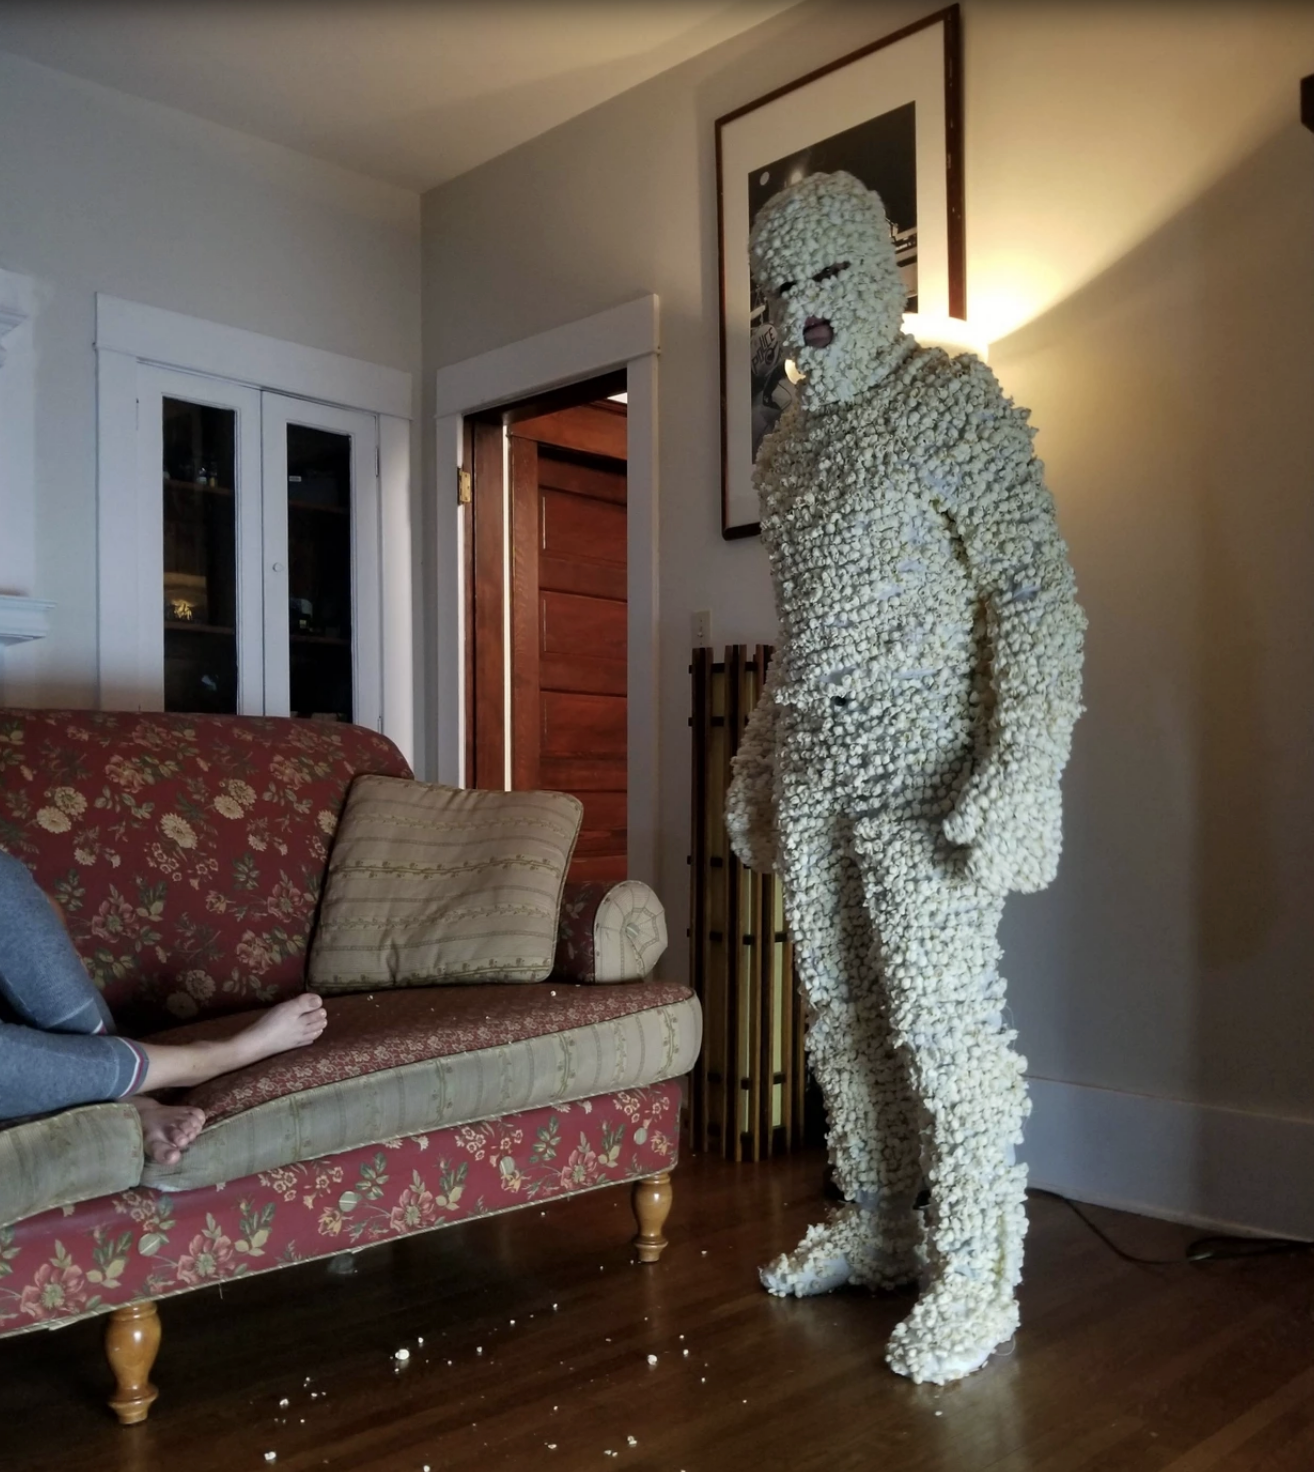 man in a full body popcorn costume